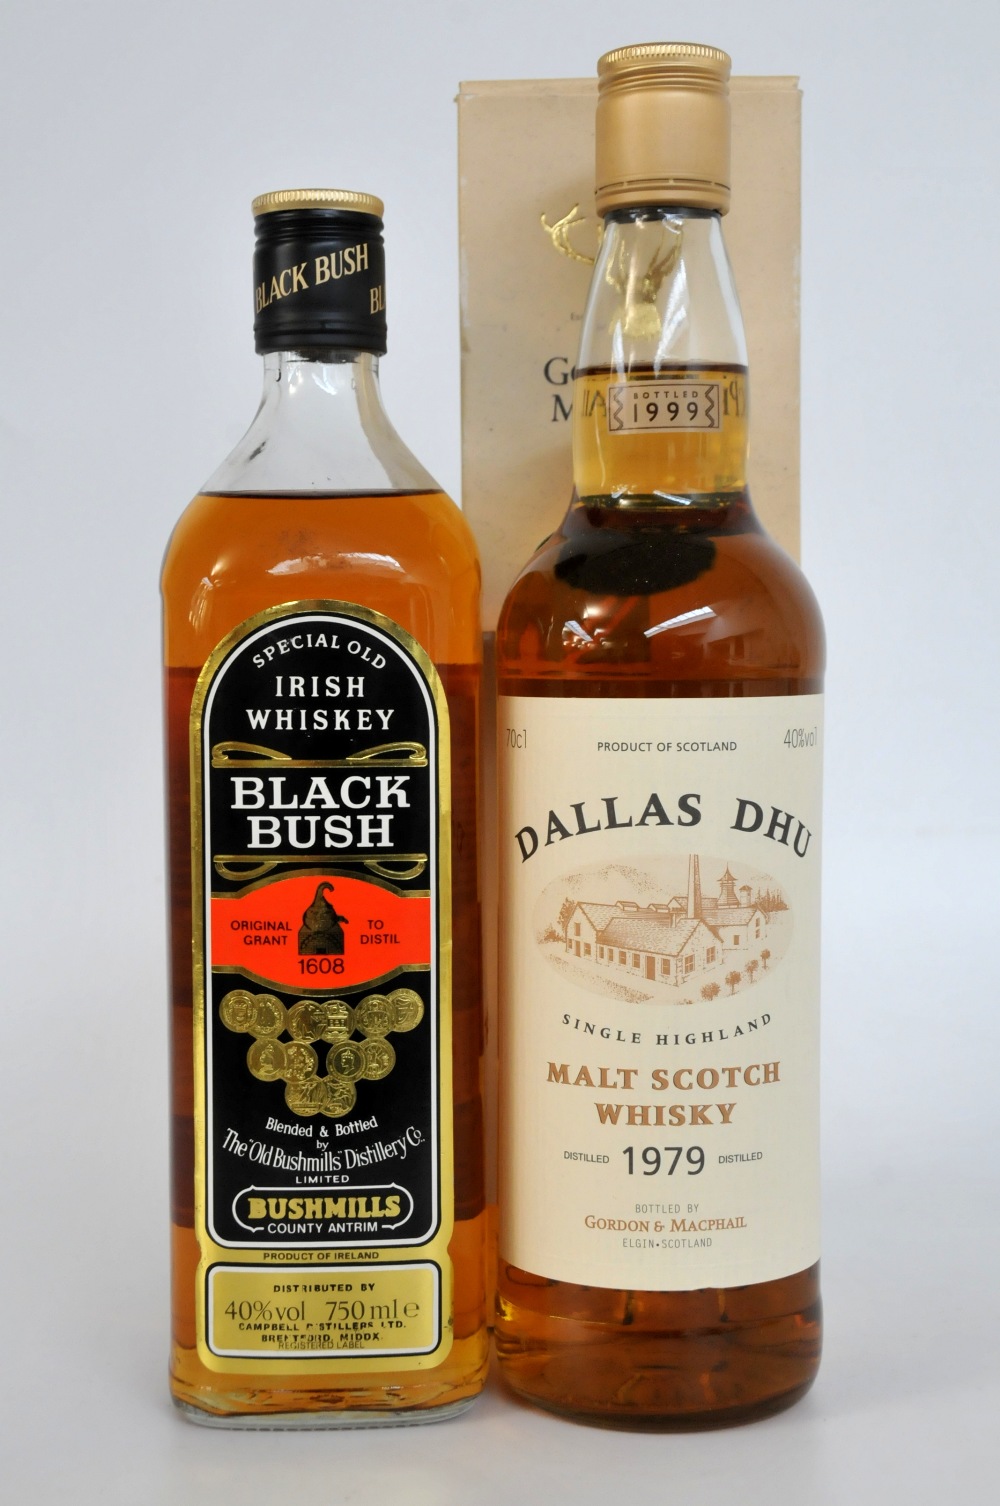 DALLAS DHU & BLACK BUSH
1 bottle Dallas Dhu 1979-1999. G&M. In presentation box. 70cl. 40%. Level in